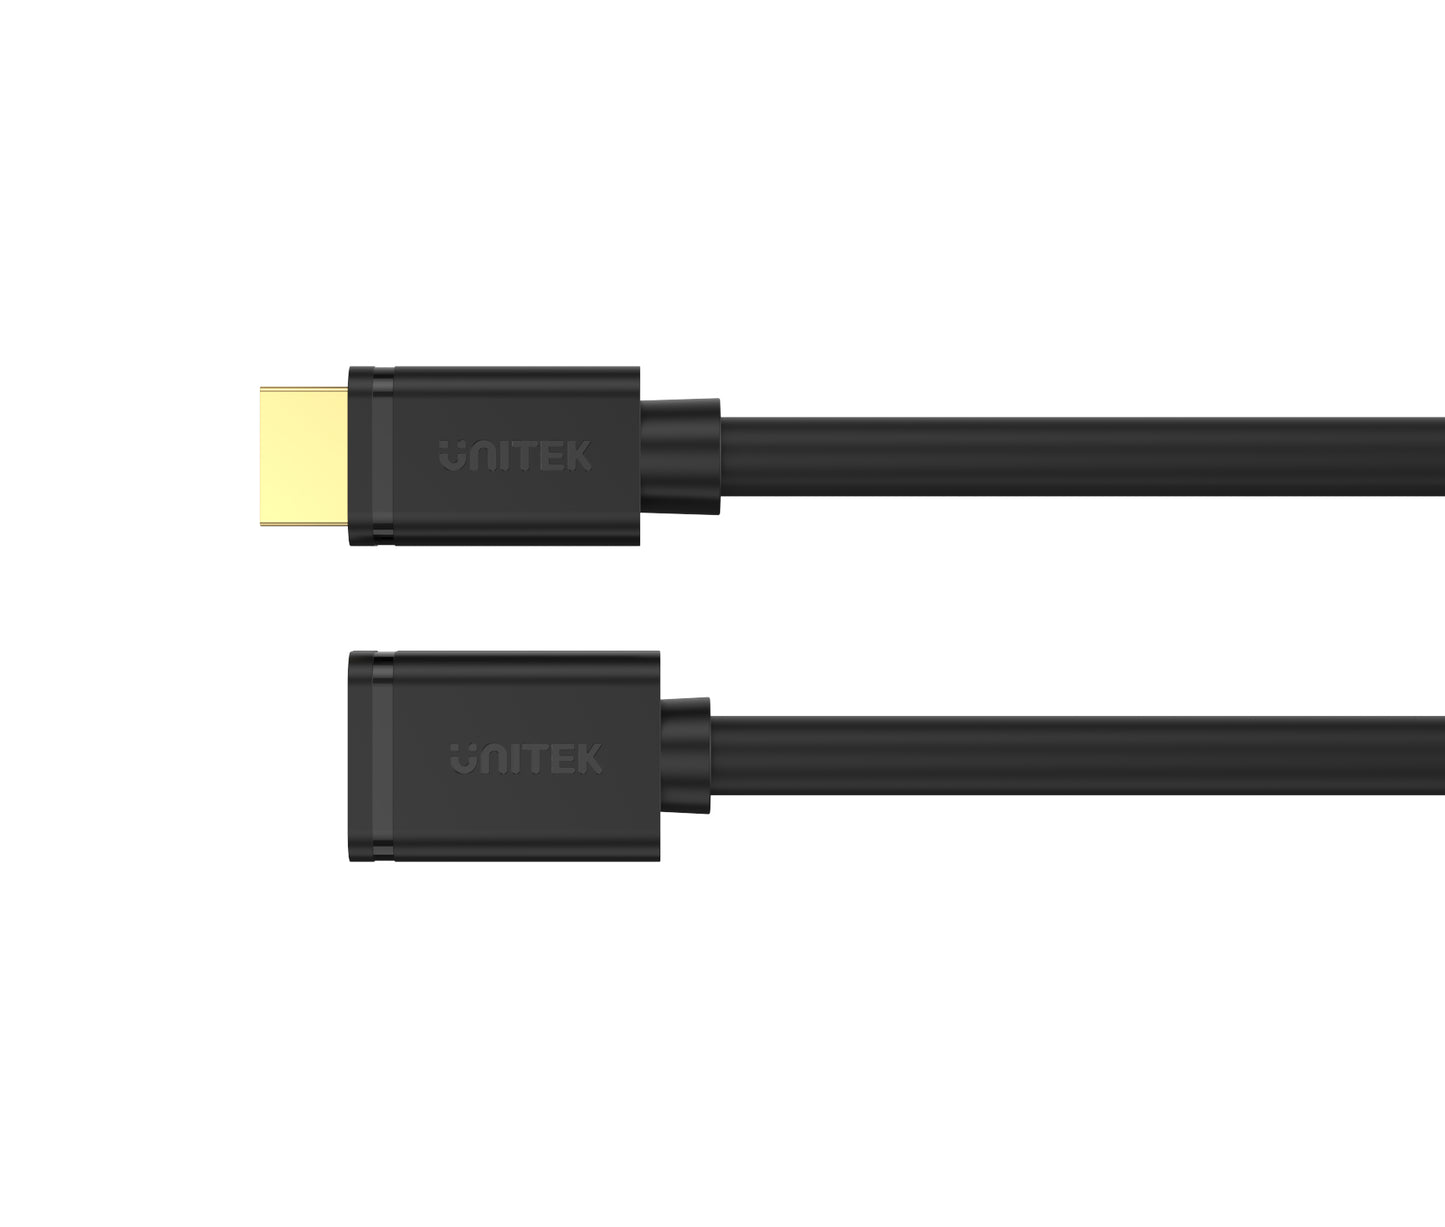 Unitek Y-C165K HDMI Male to Female 4K/HDR Extension Cable 2m